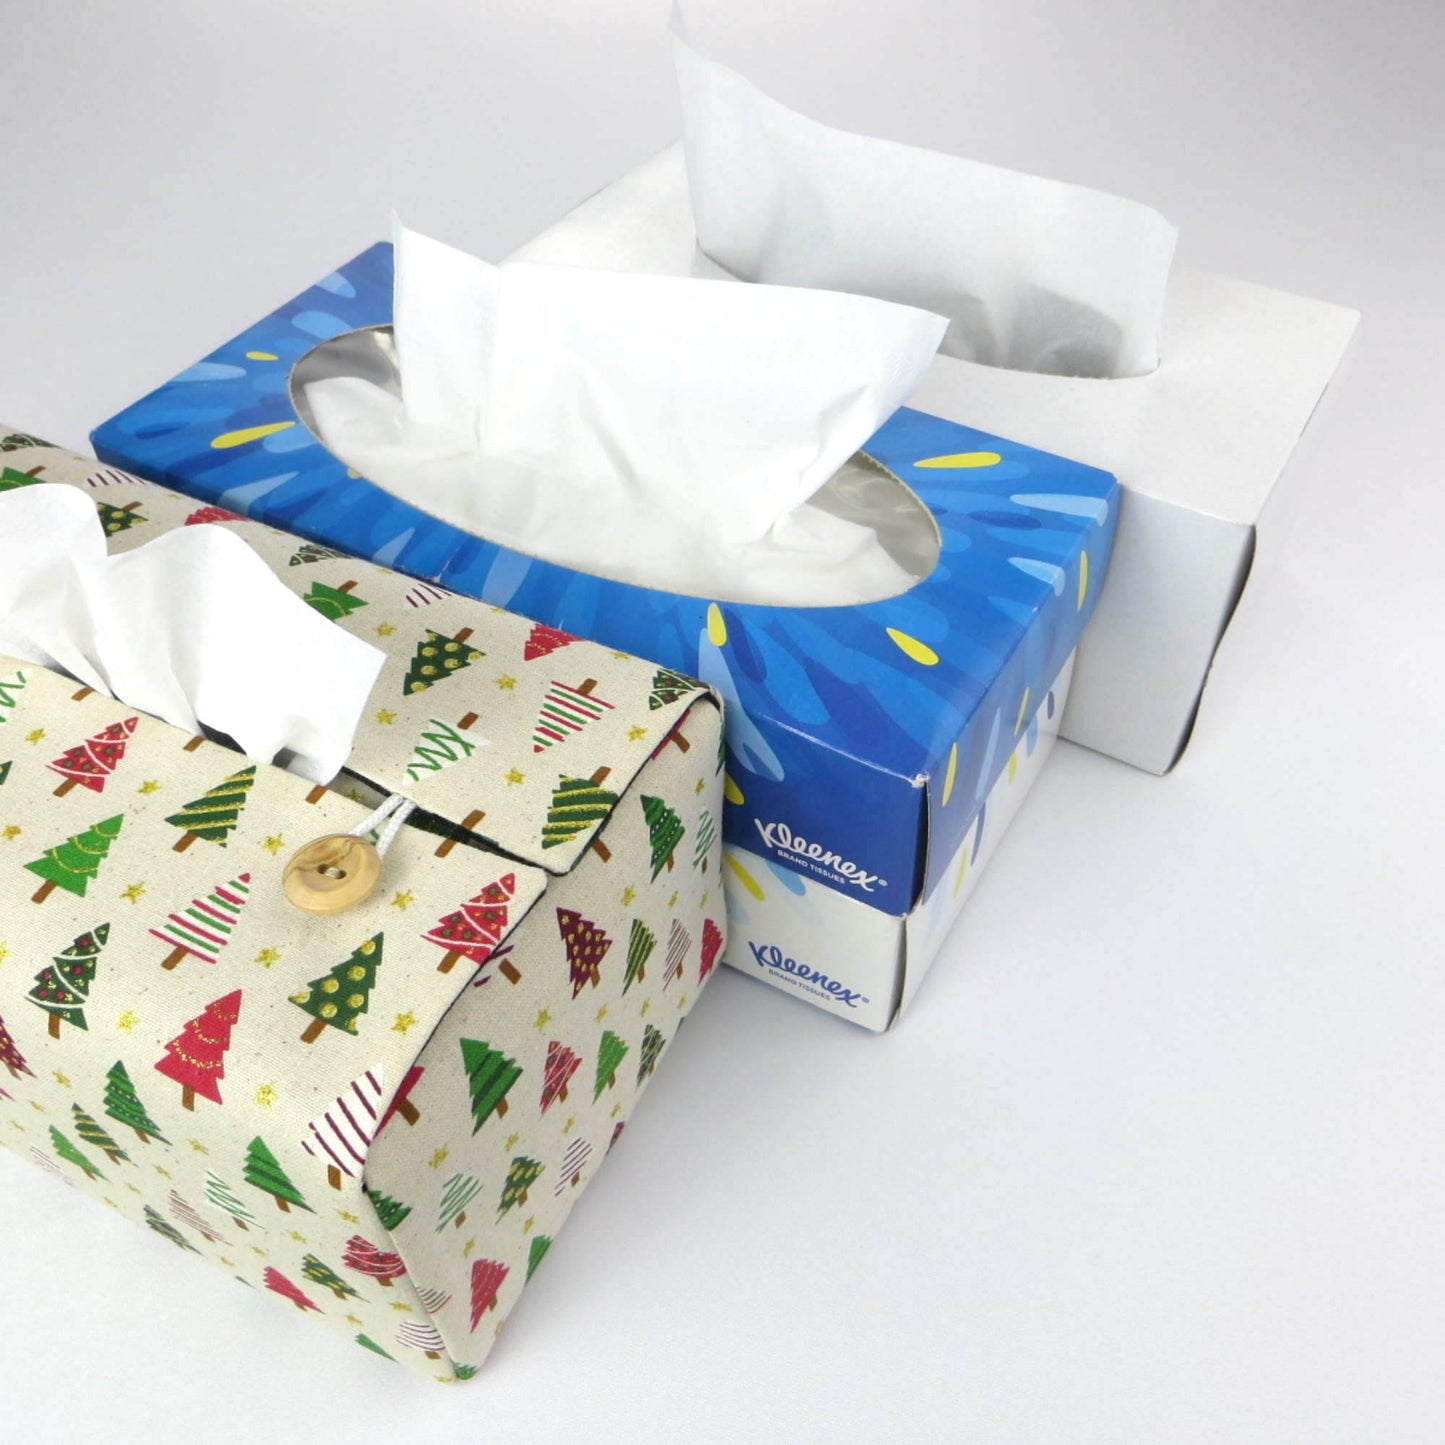 Rectangular Fabric Tissue Box Cover - Decorated Trees Christmas Design